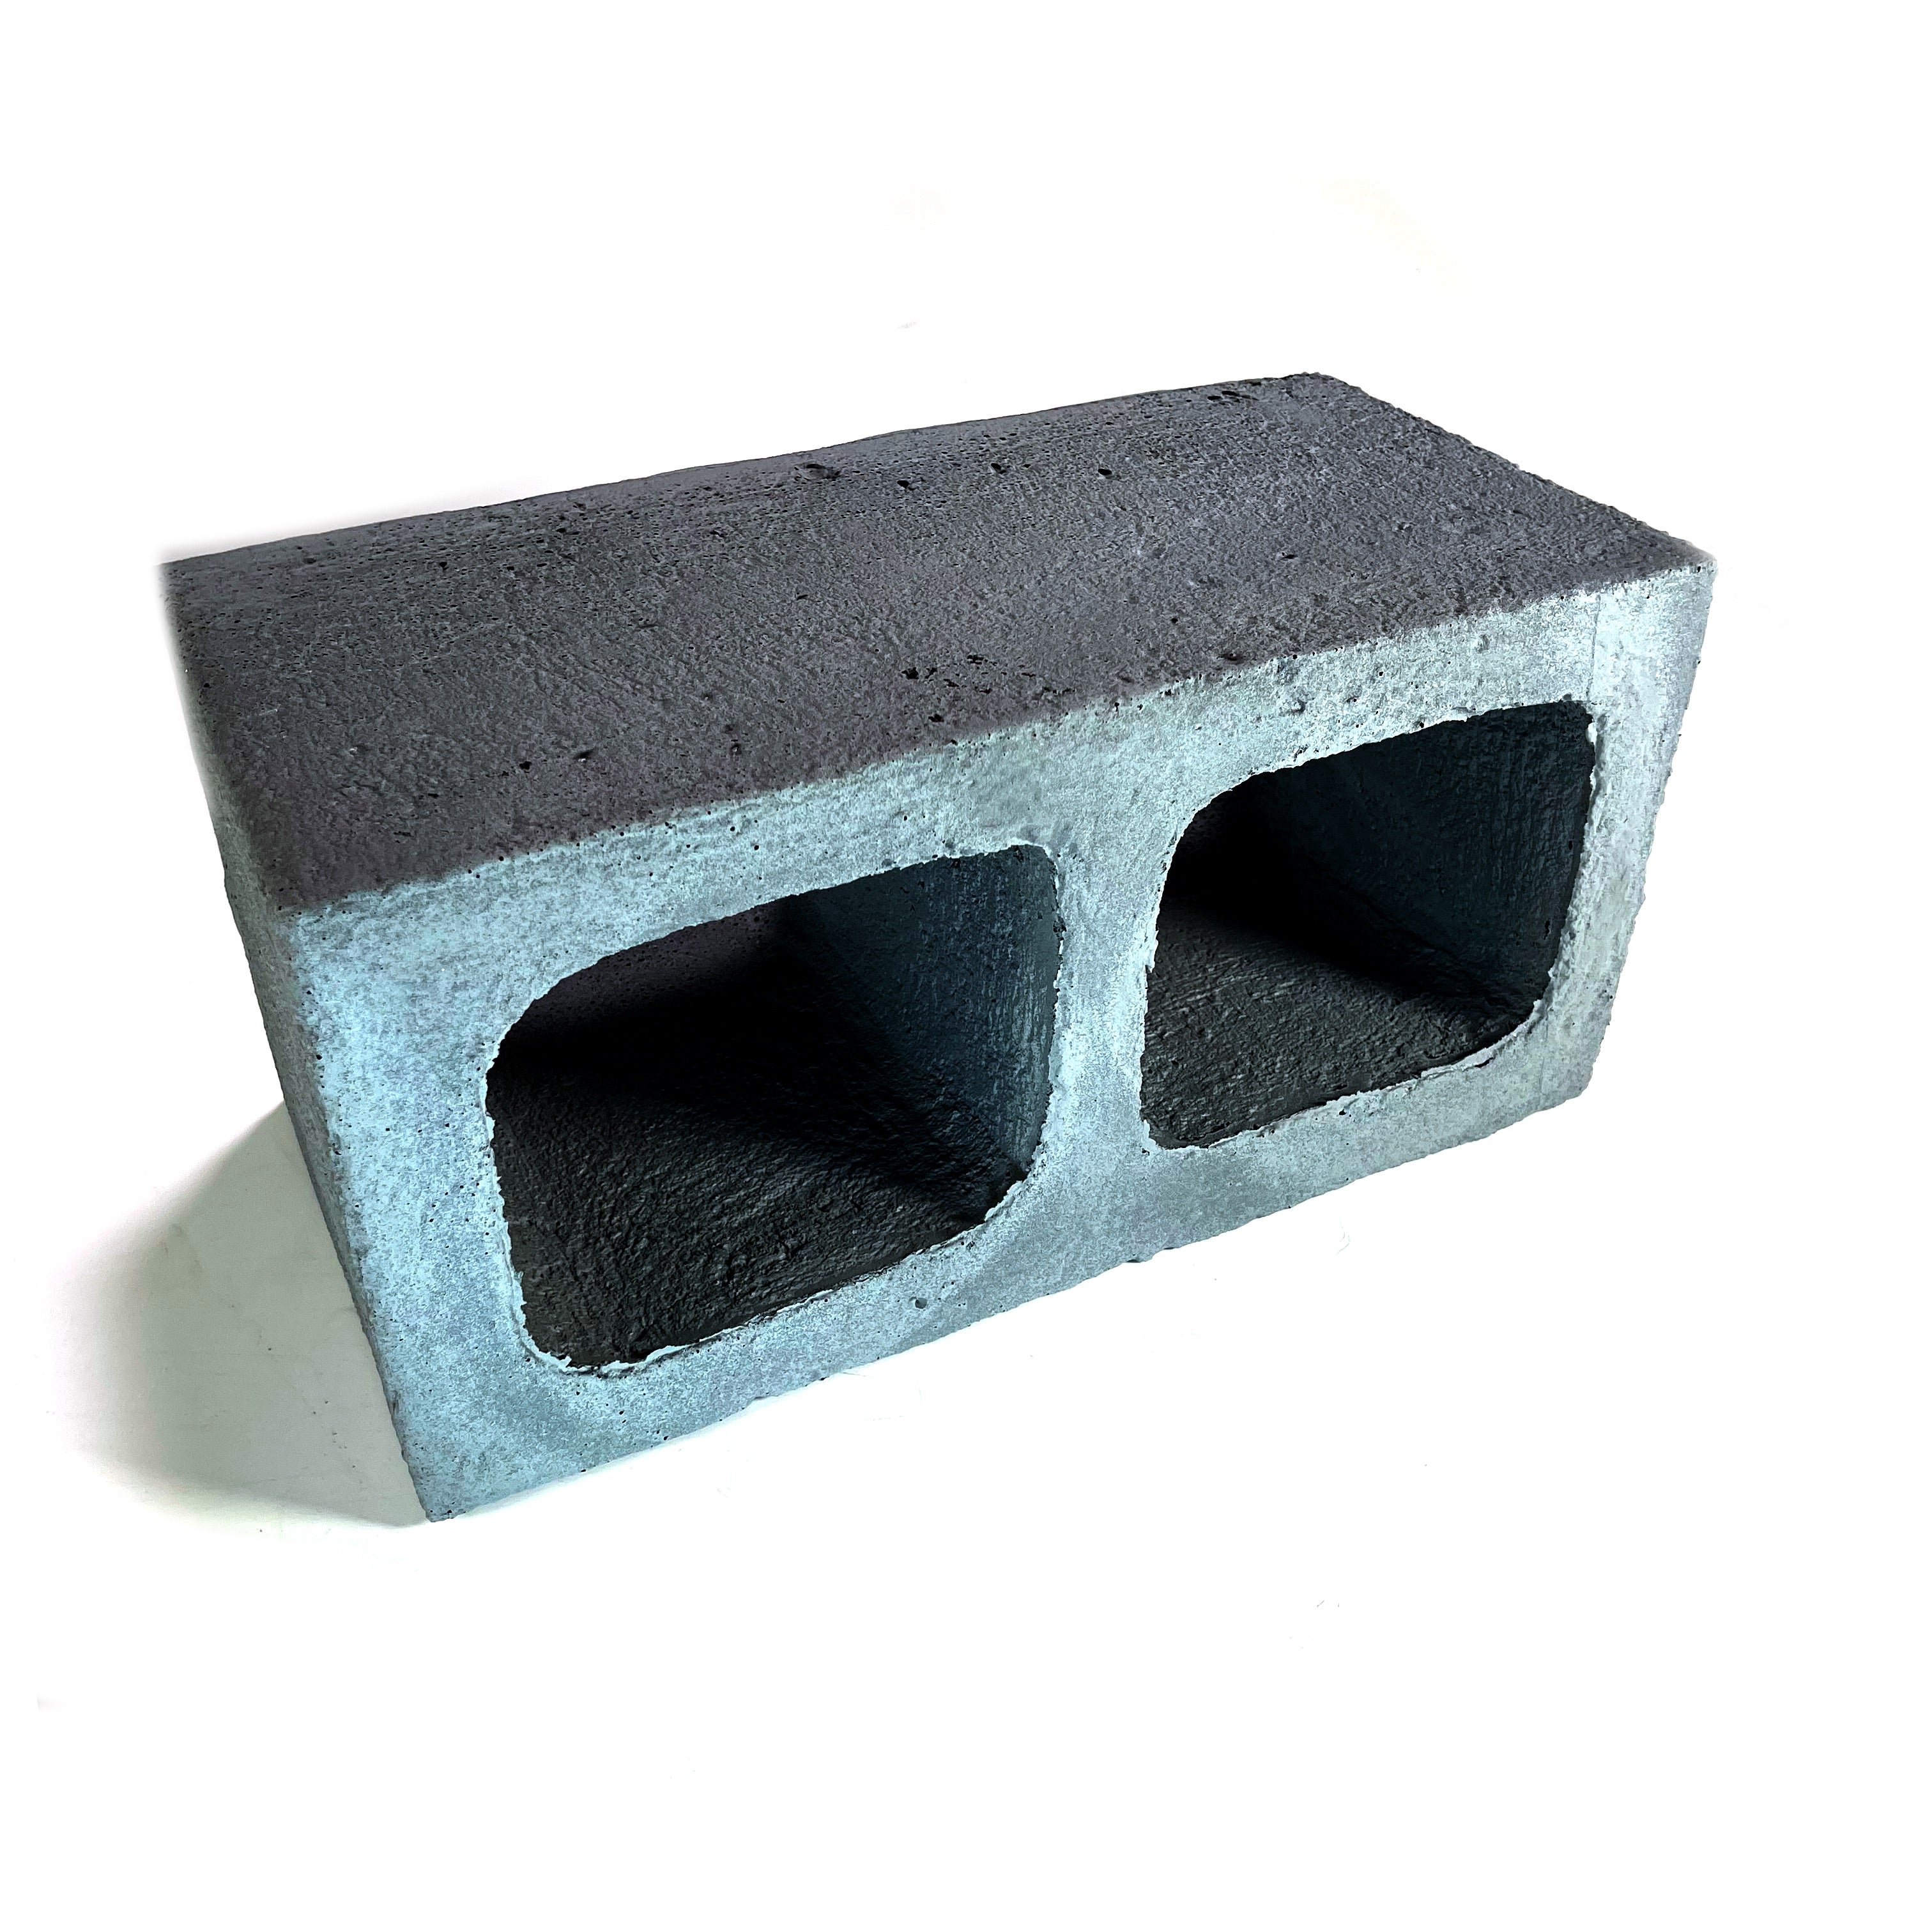 Flexible Soft Urethane Foam Rubber Cement Cinder Block Replica Prop - GREY